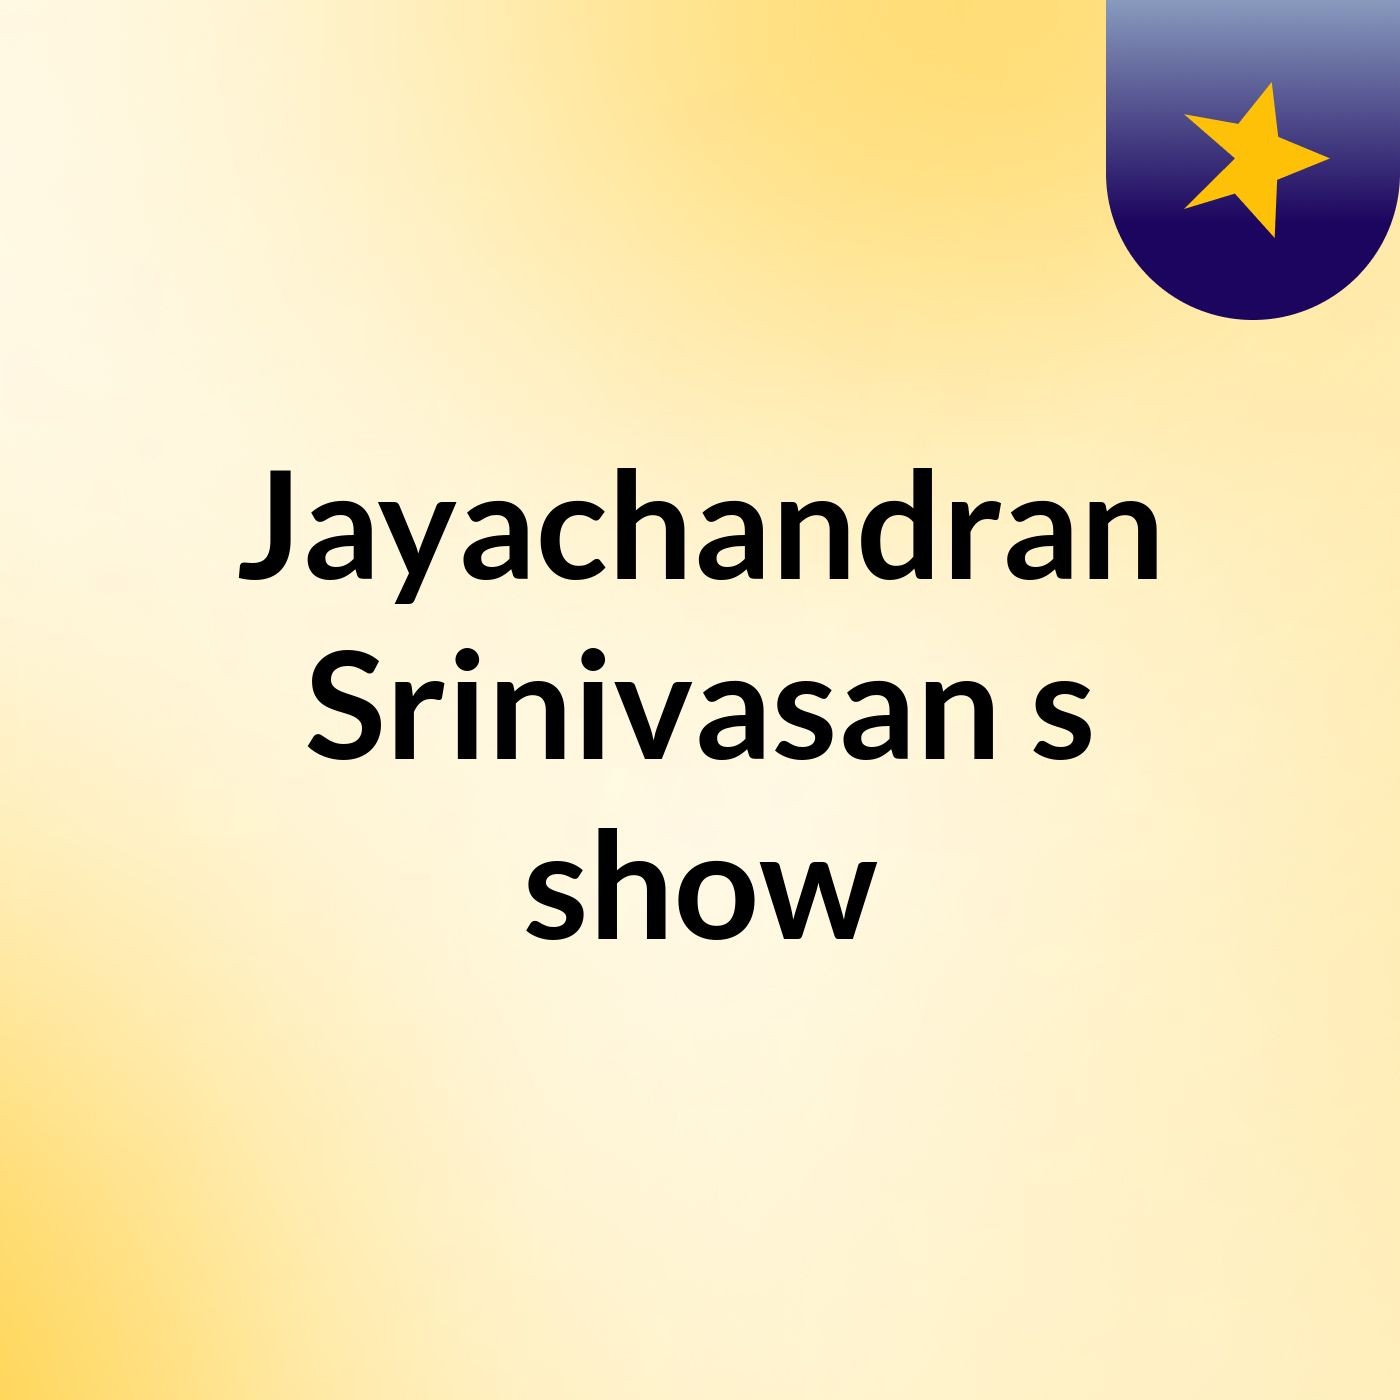 Episode 2 - Jayachandran Srinivasan's show